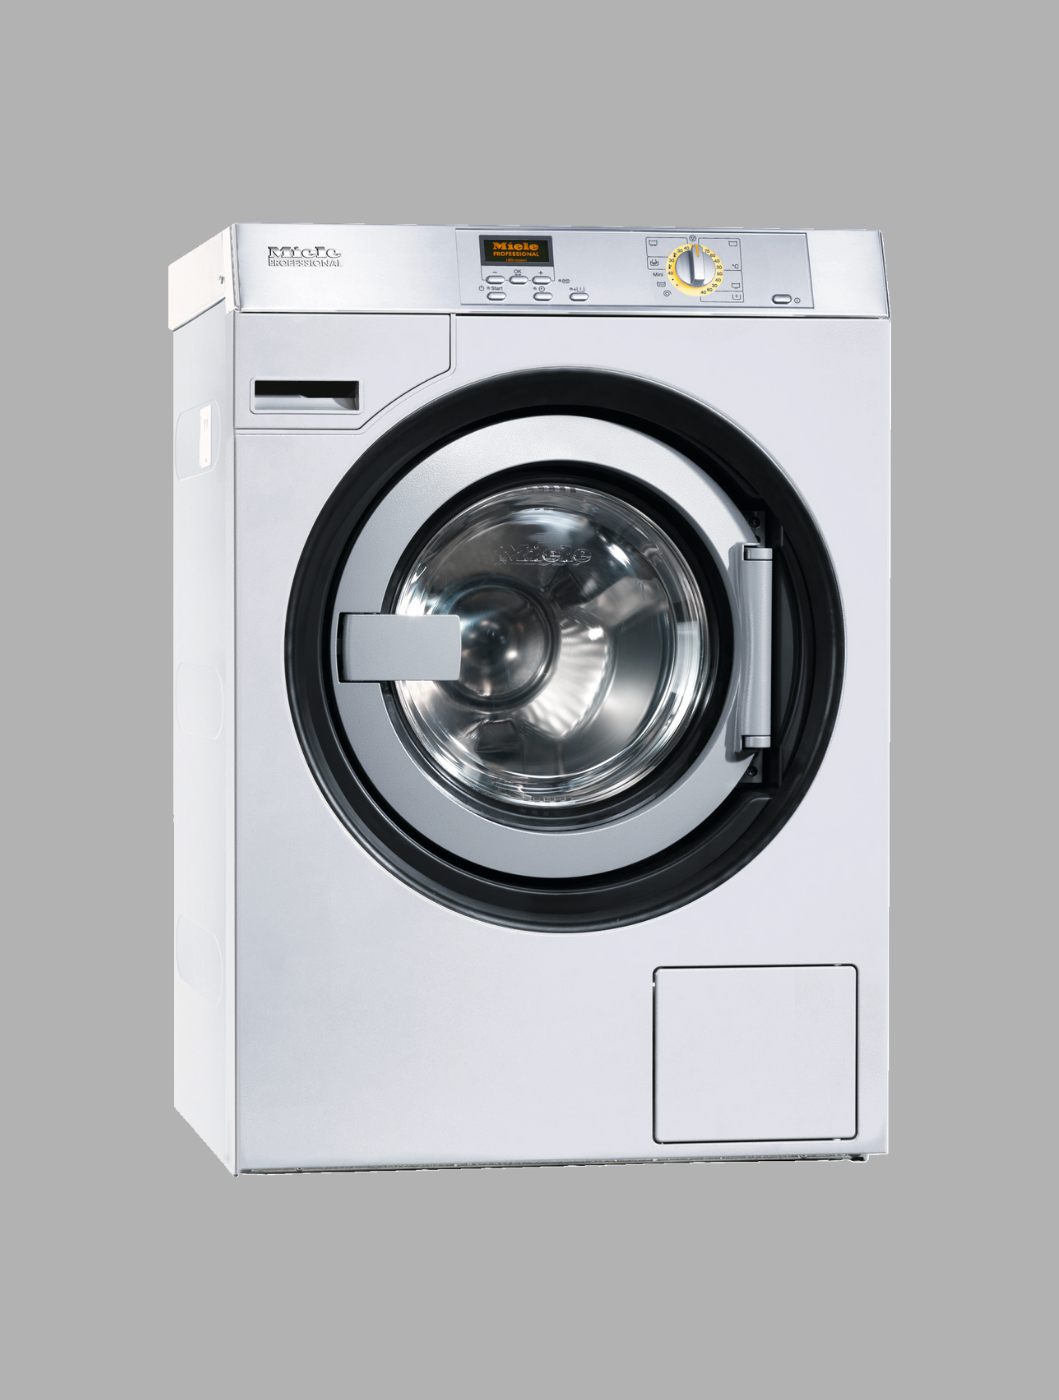 Miele PW 5082 XL washing machine with background